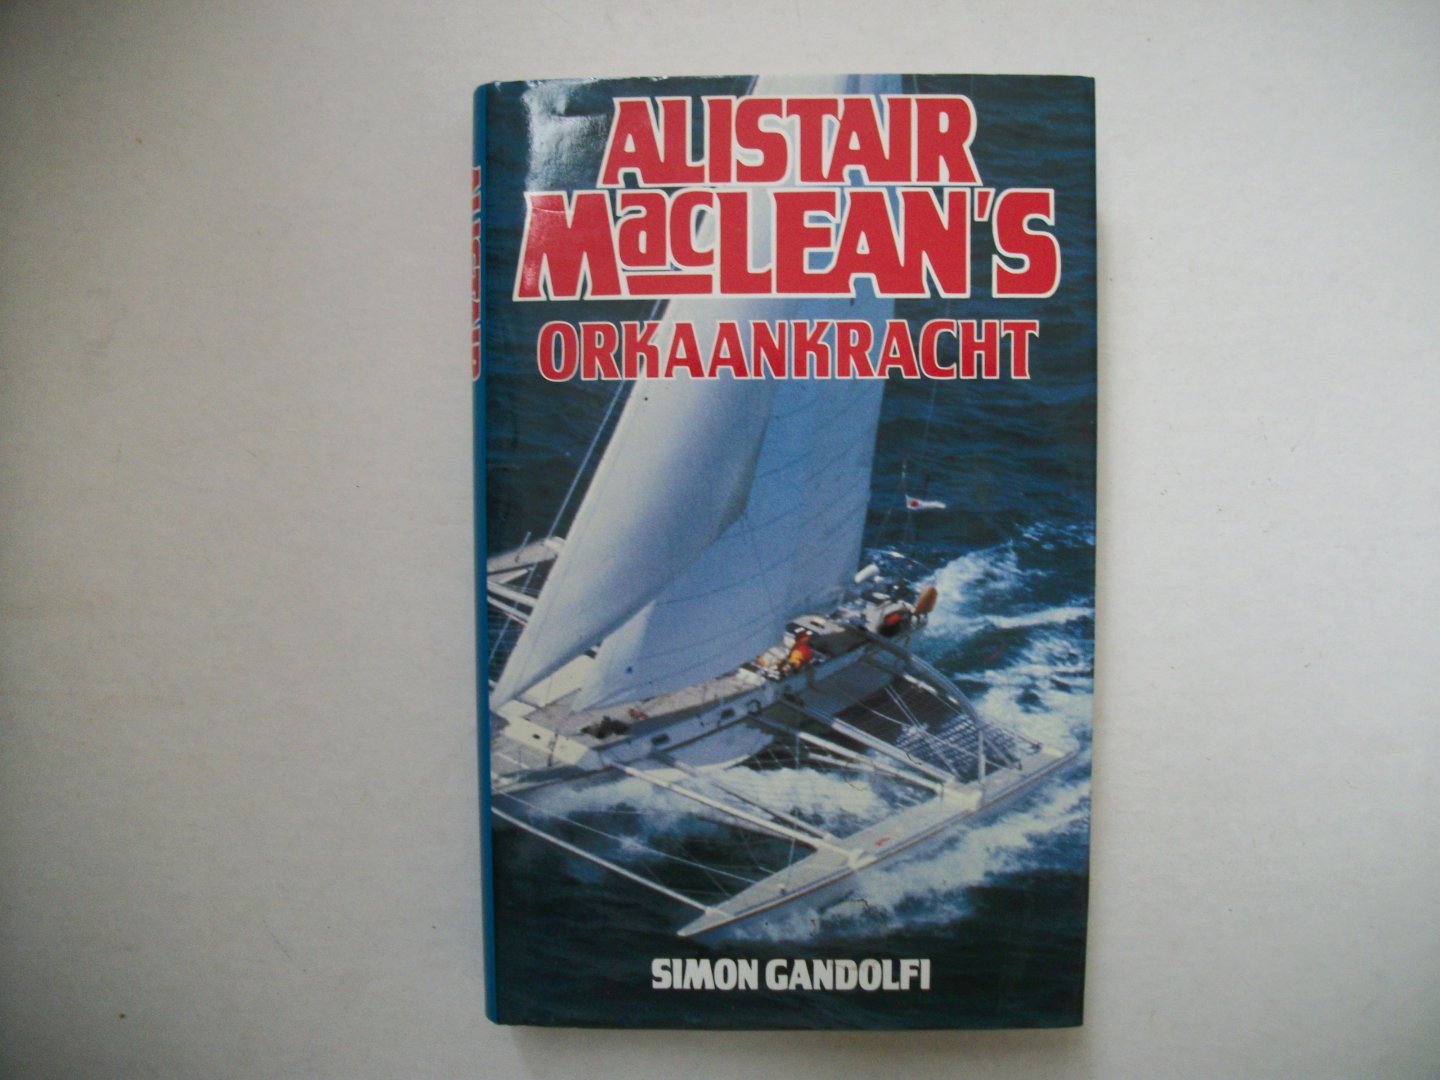 Gandolfi, Simon - Alistair MacLean's orkaankracht